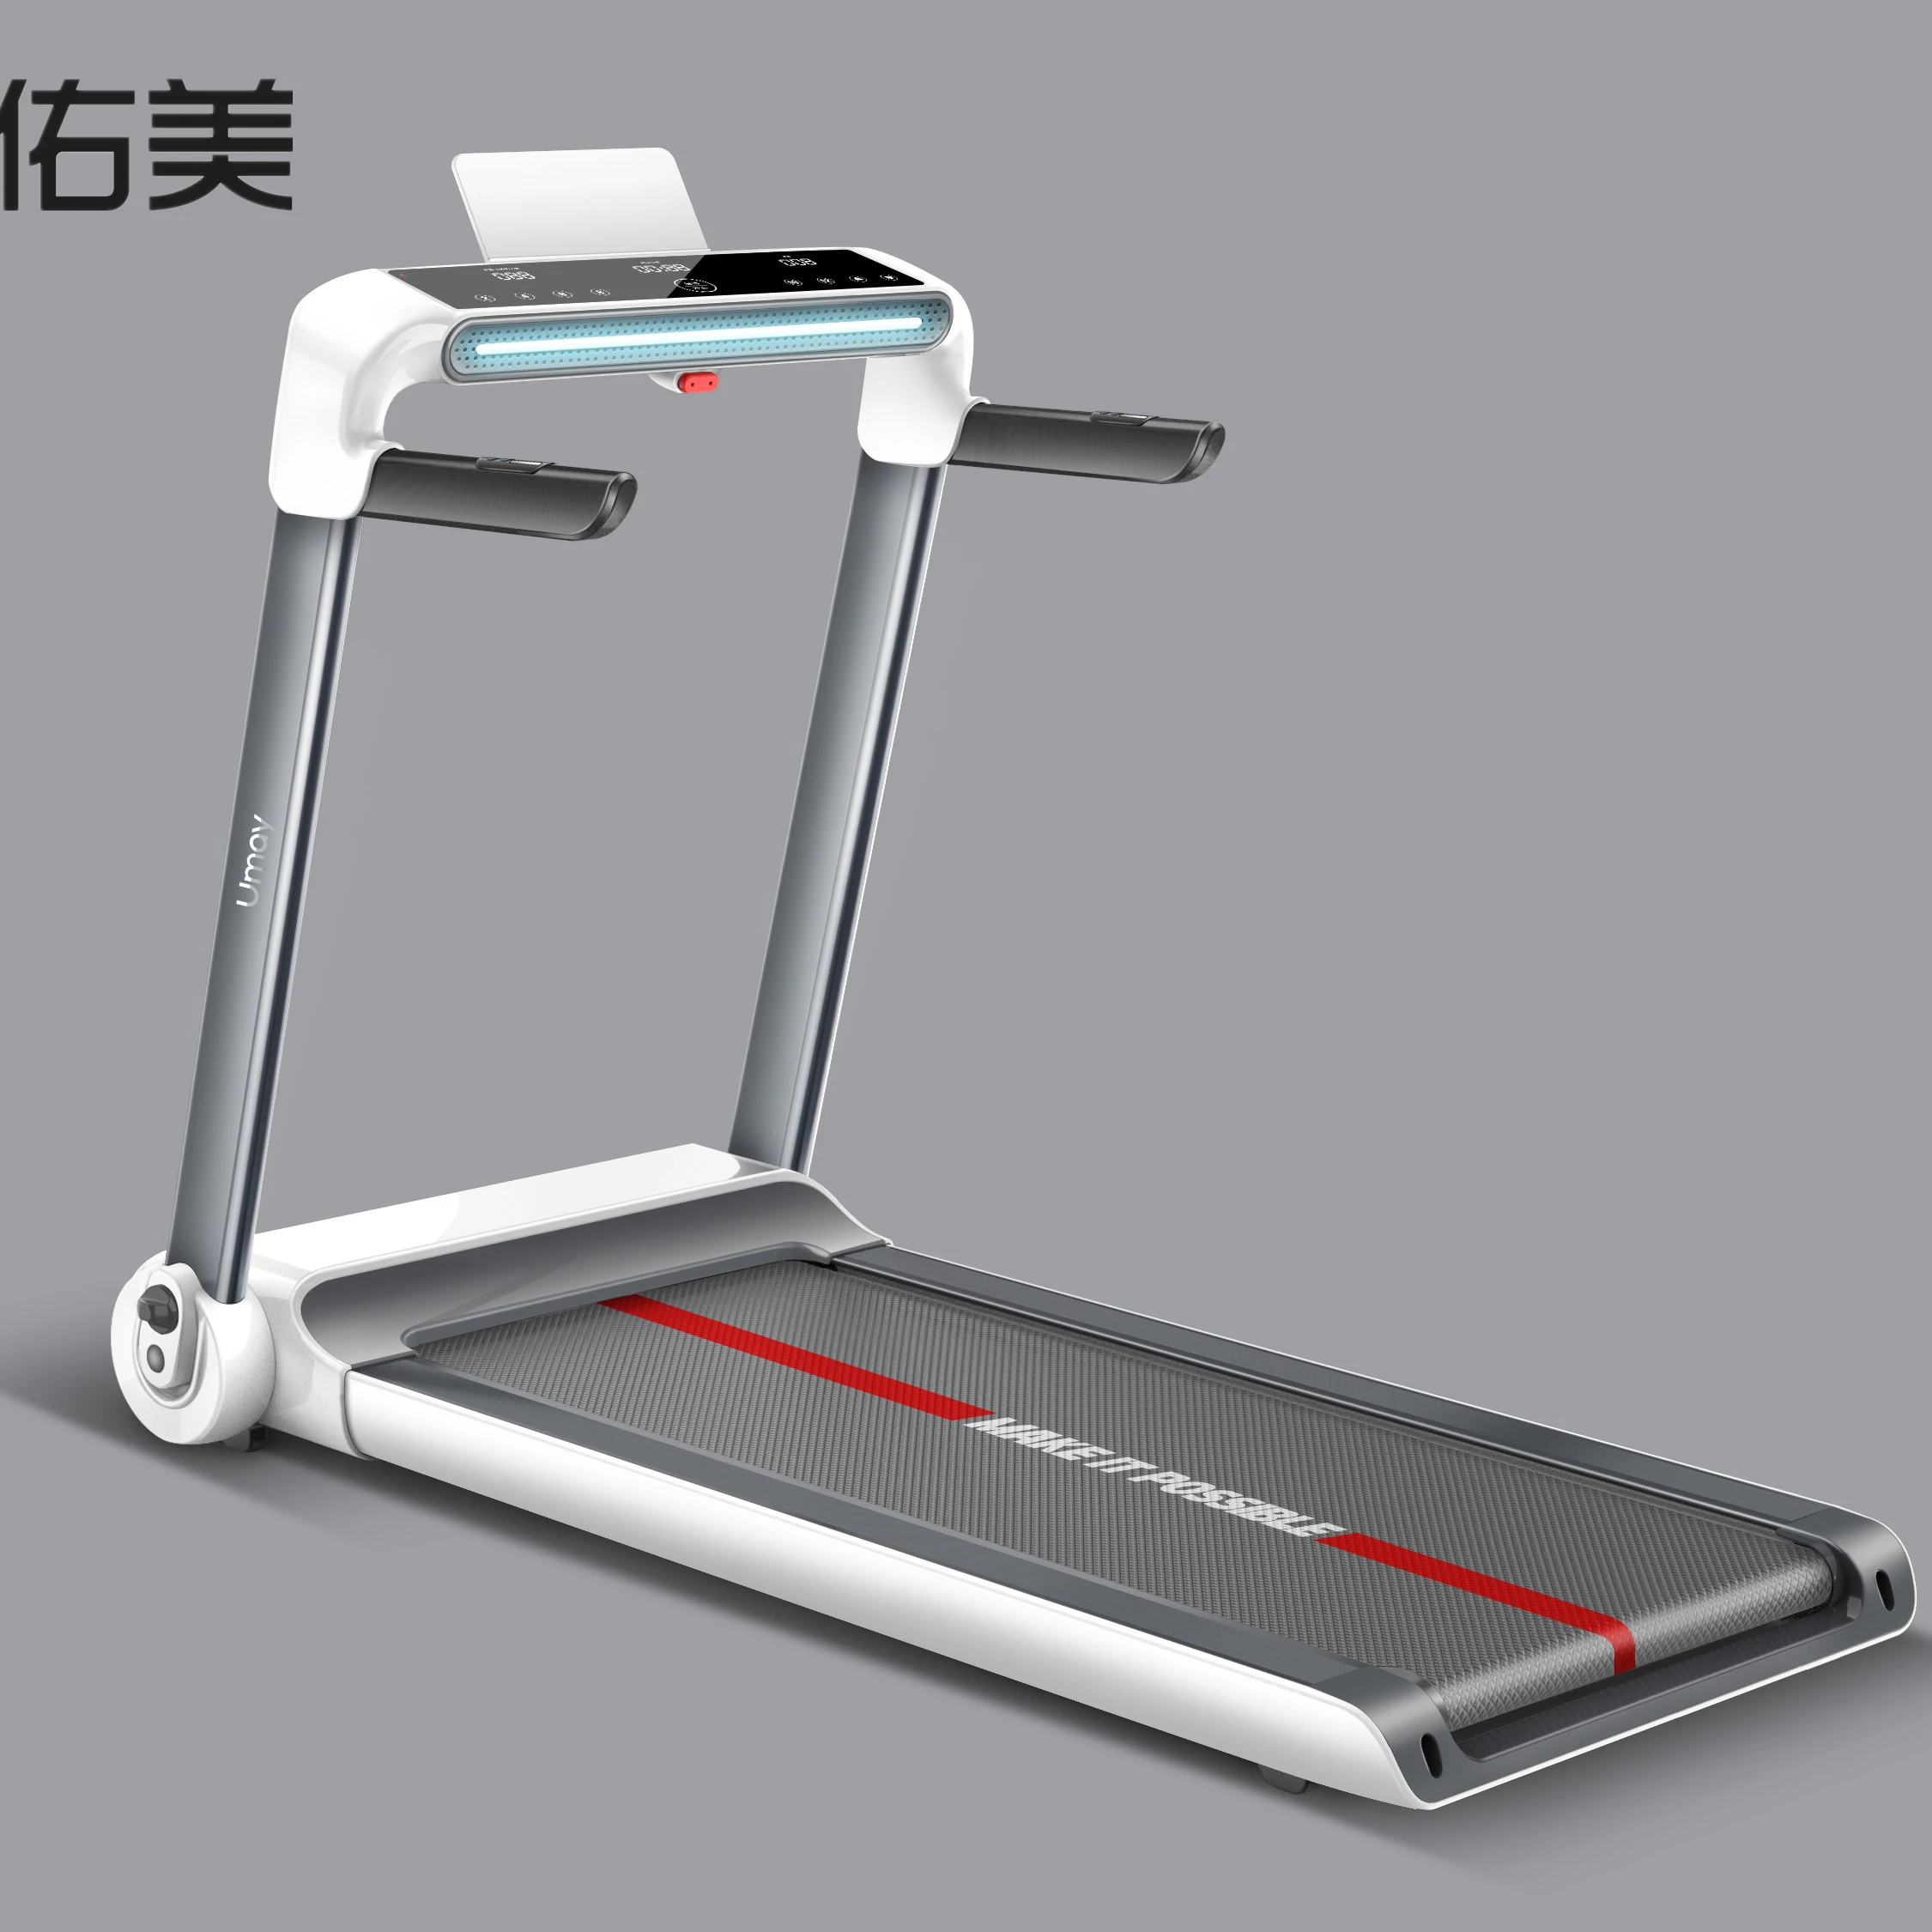 foldable treadmills for sale